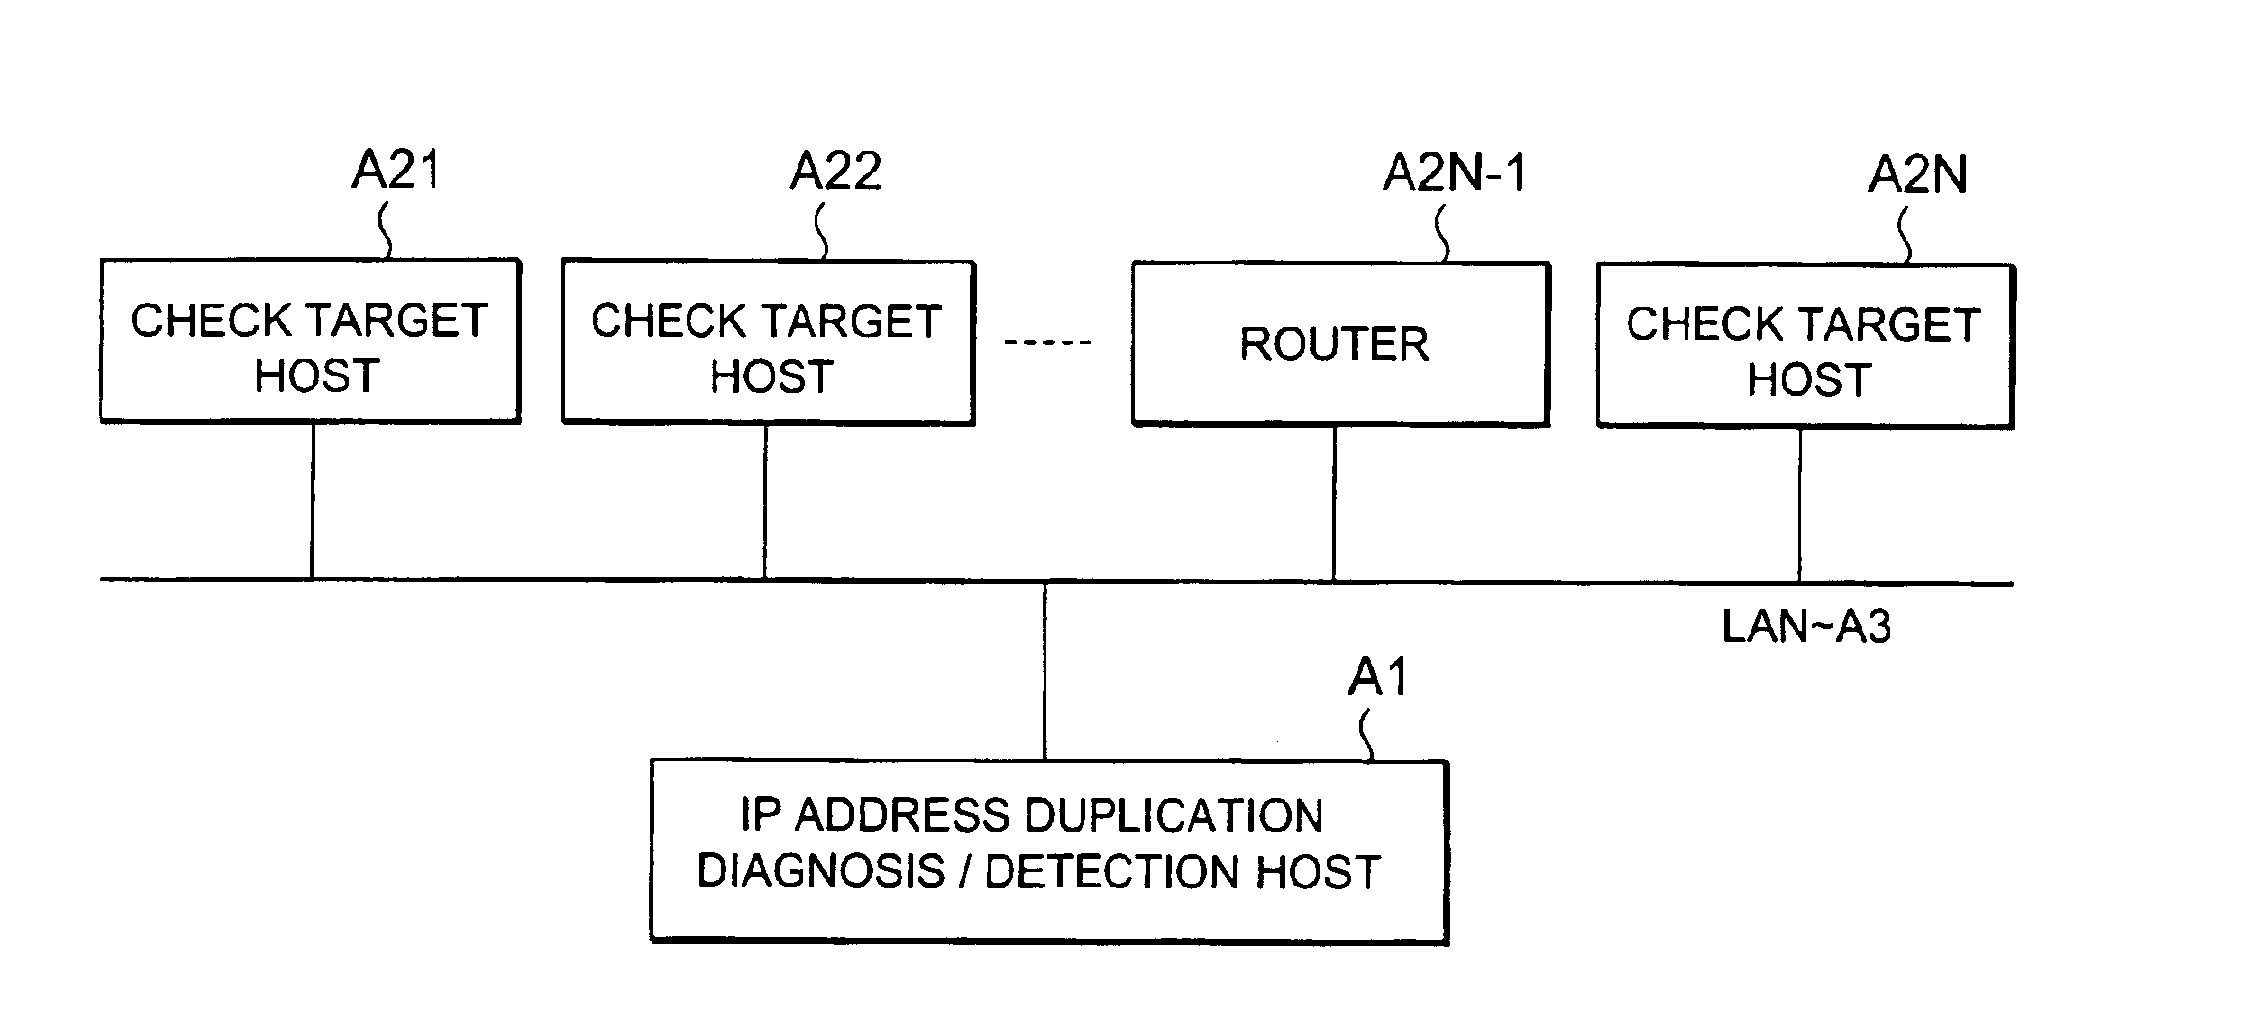 IP address duplication detection method using address resolution protocol